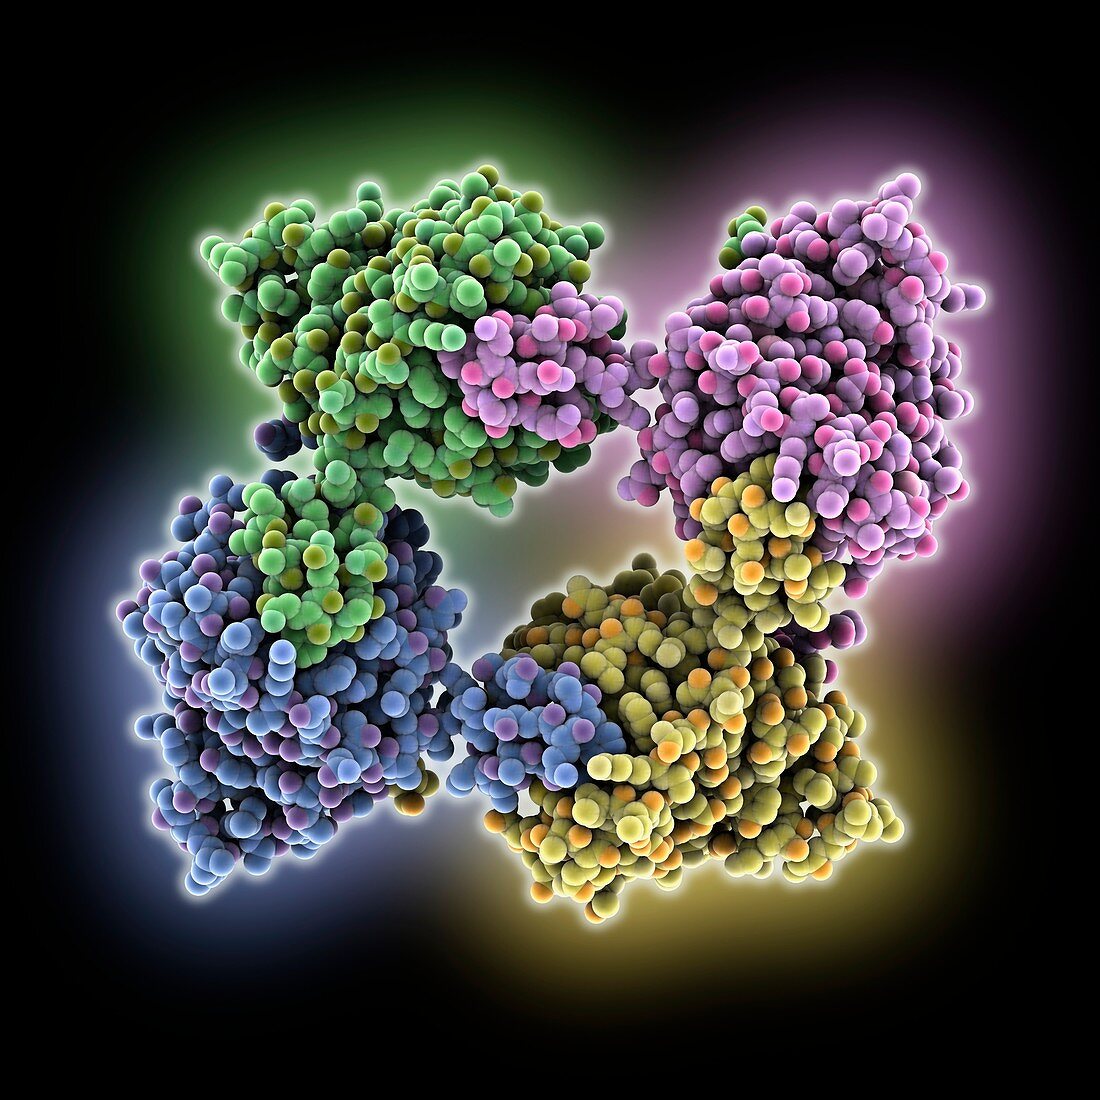 Schmallenberg virus nucleocapsid, molecular model